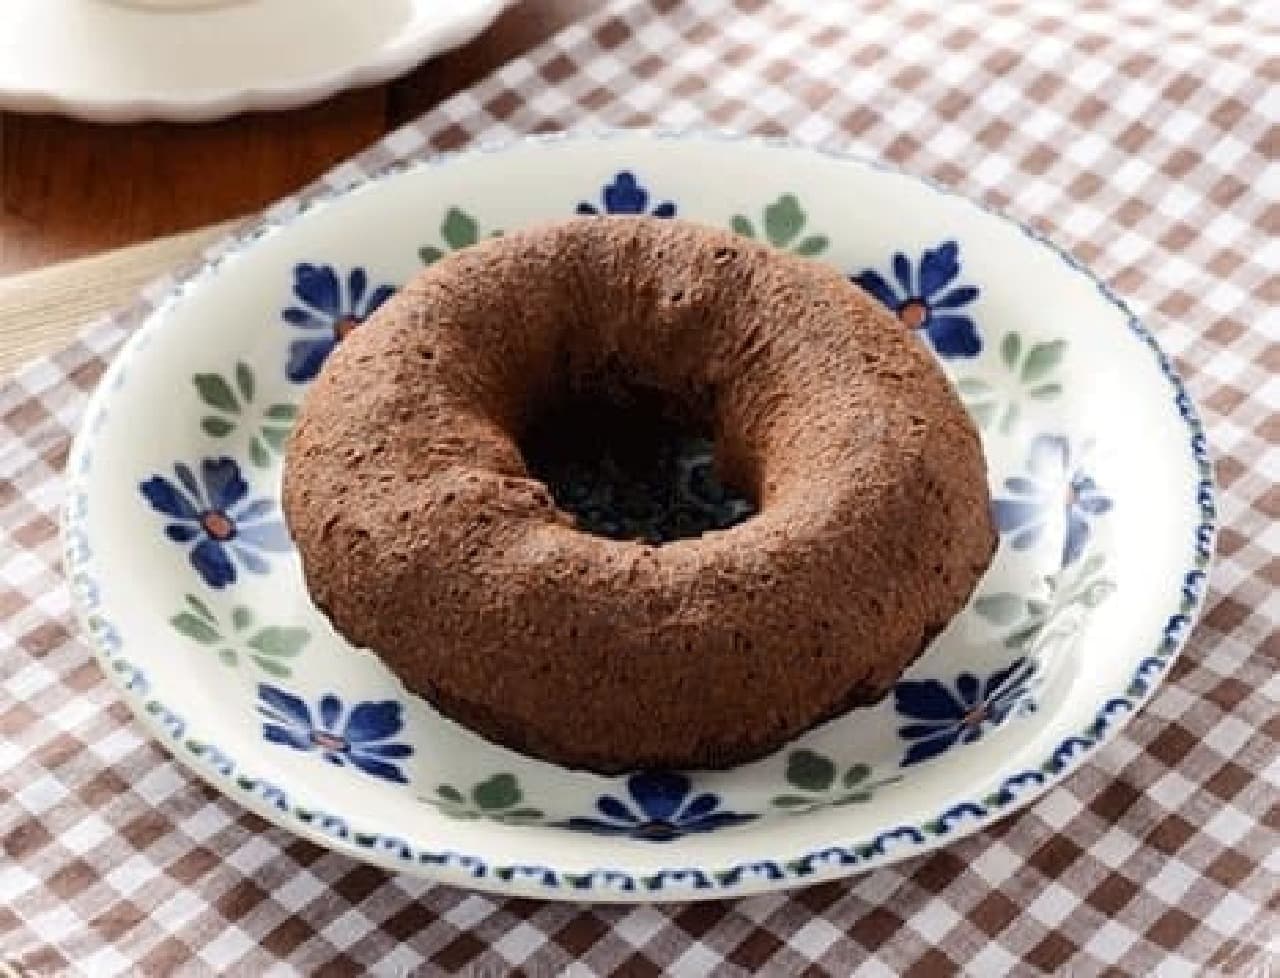 Lawson's "NL Bran Donut Chocolate"